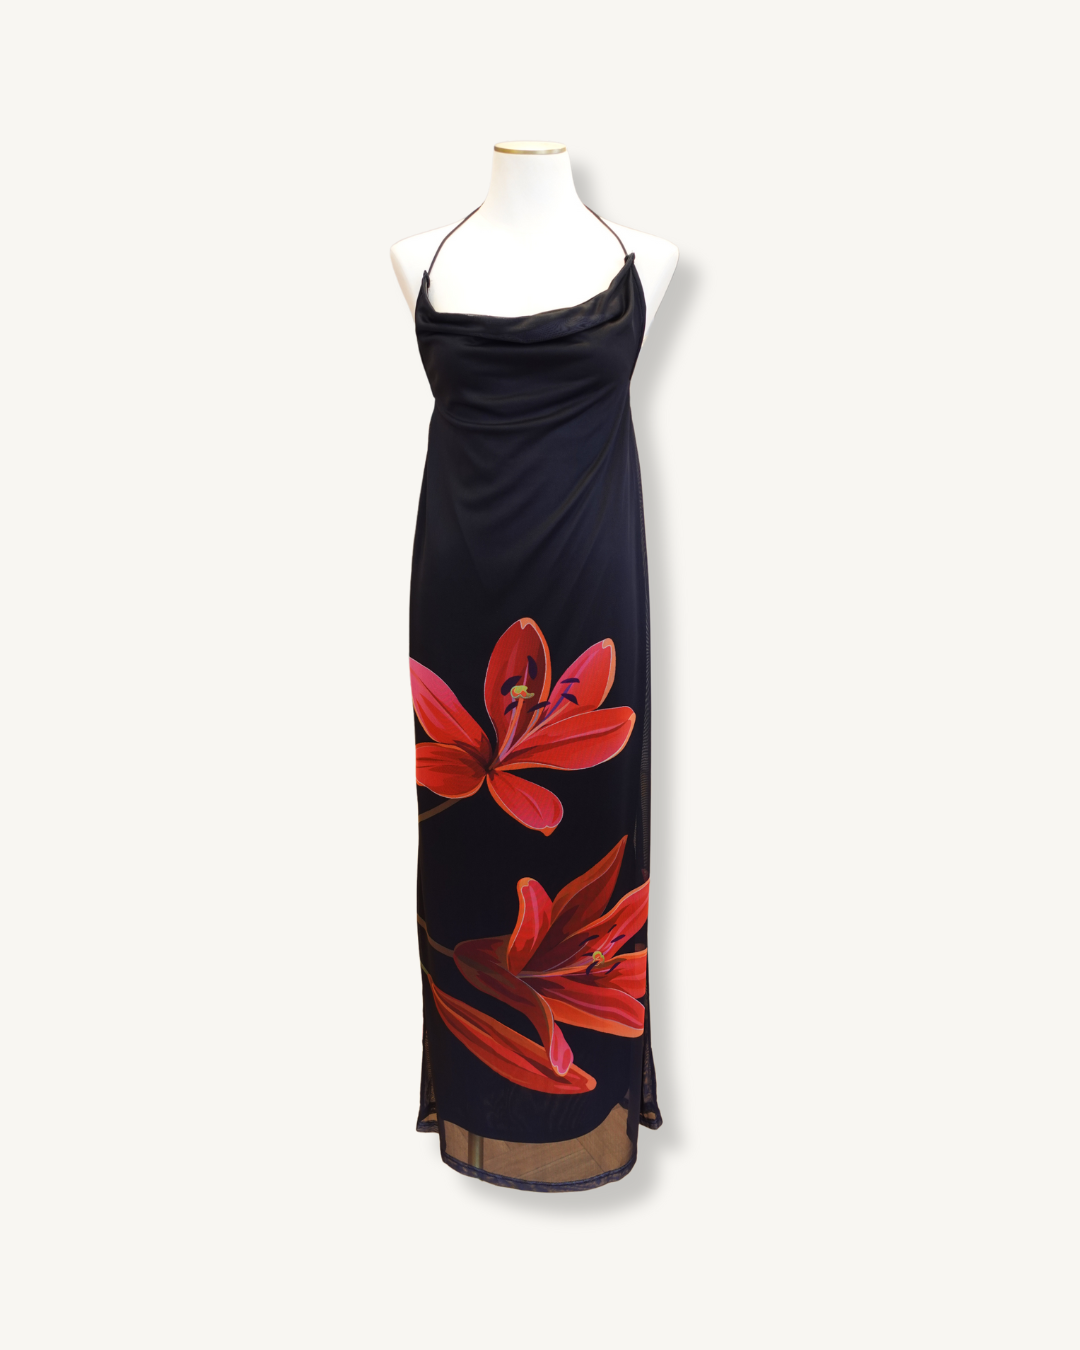 Lily Flower Dress